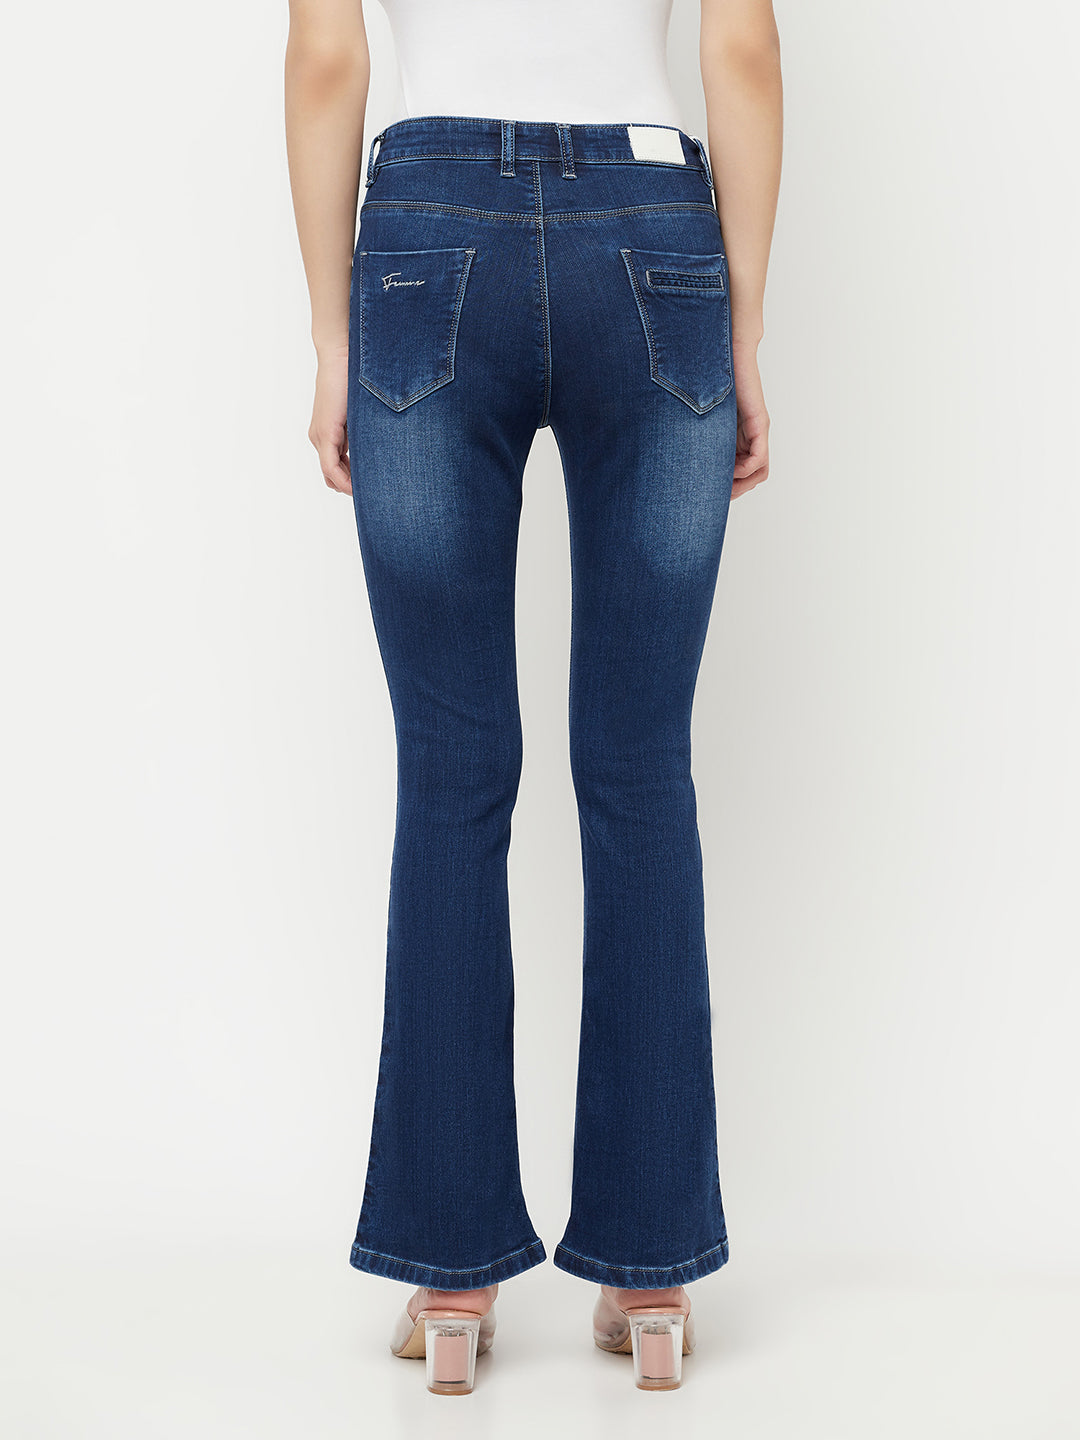 Blue Light Fade Bootcut Jeans - Women Jeans